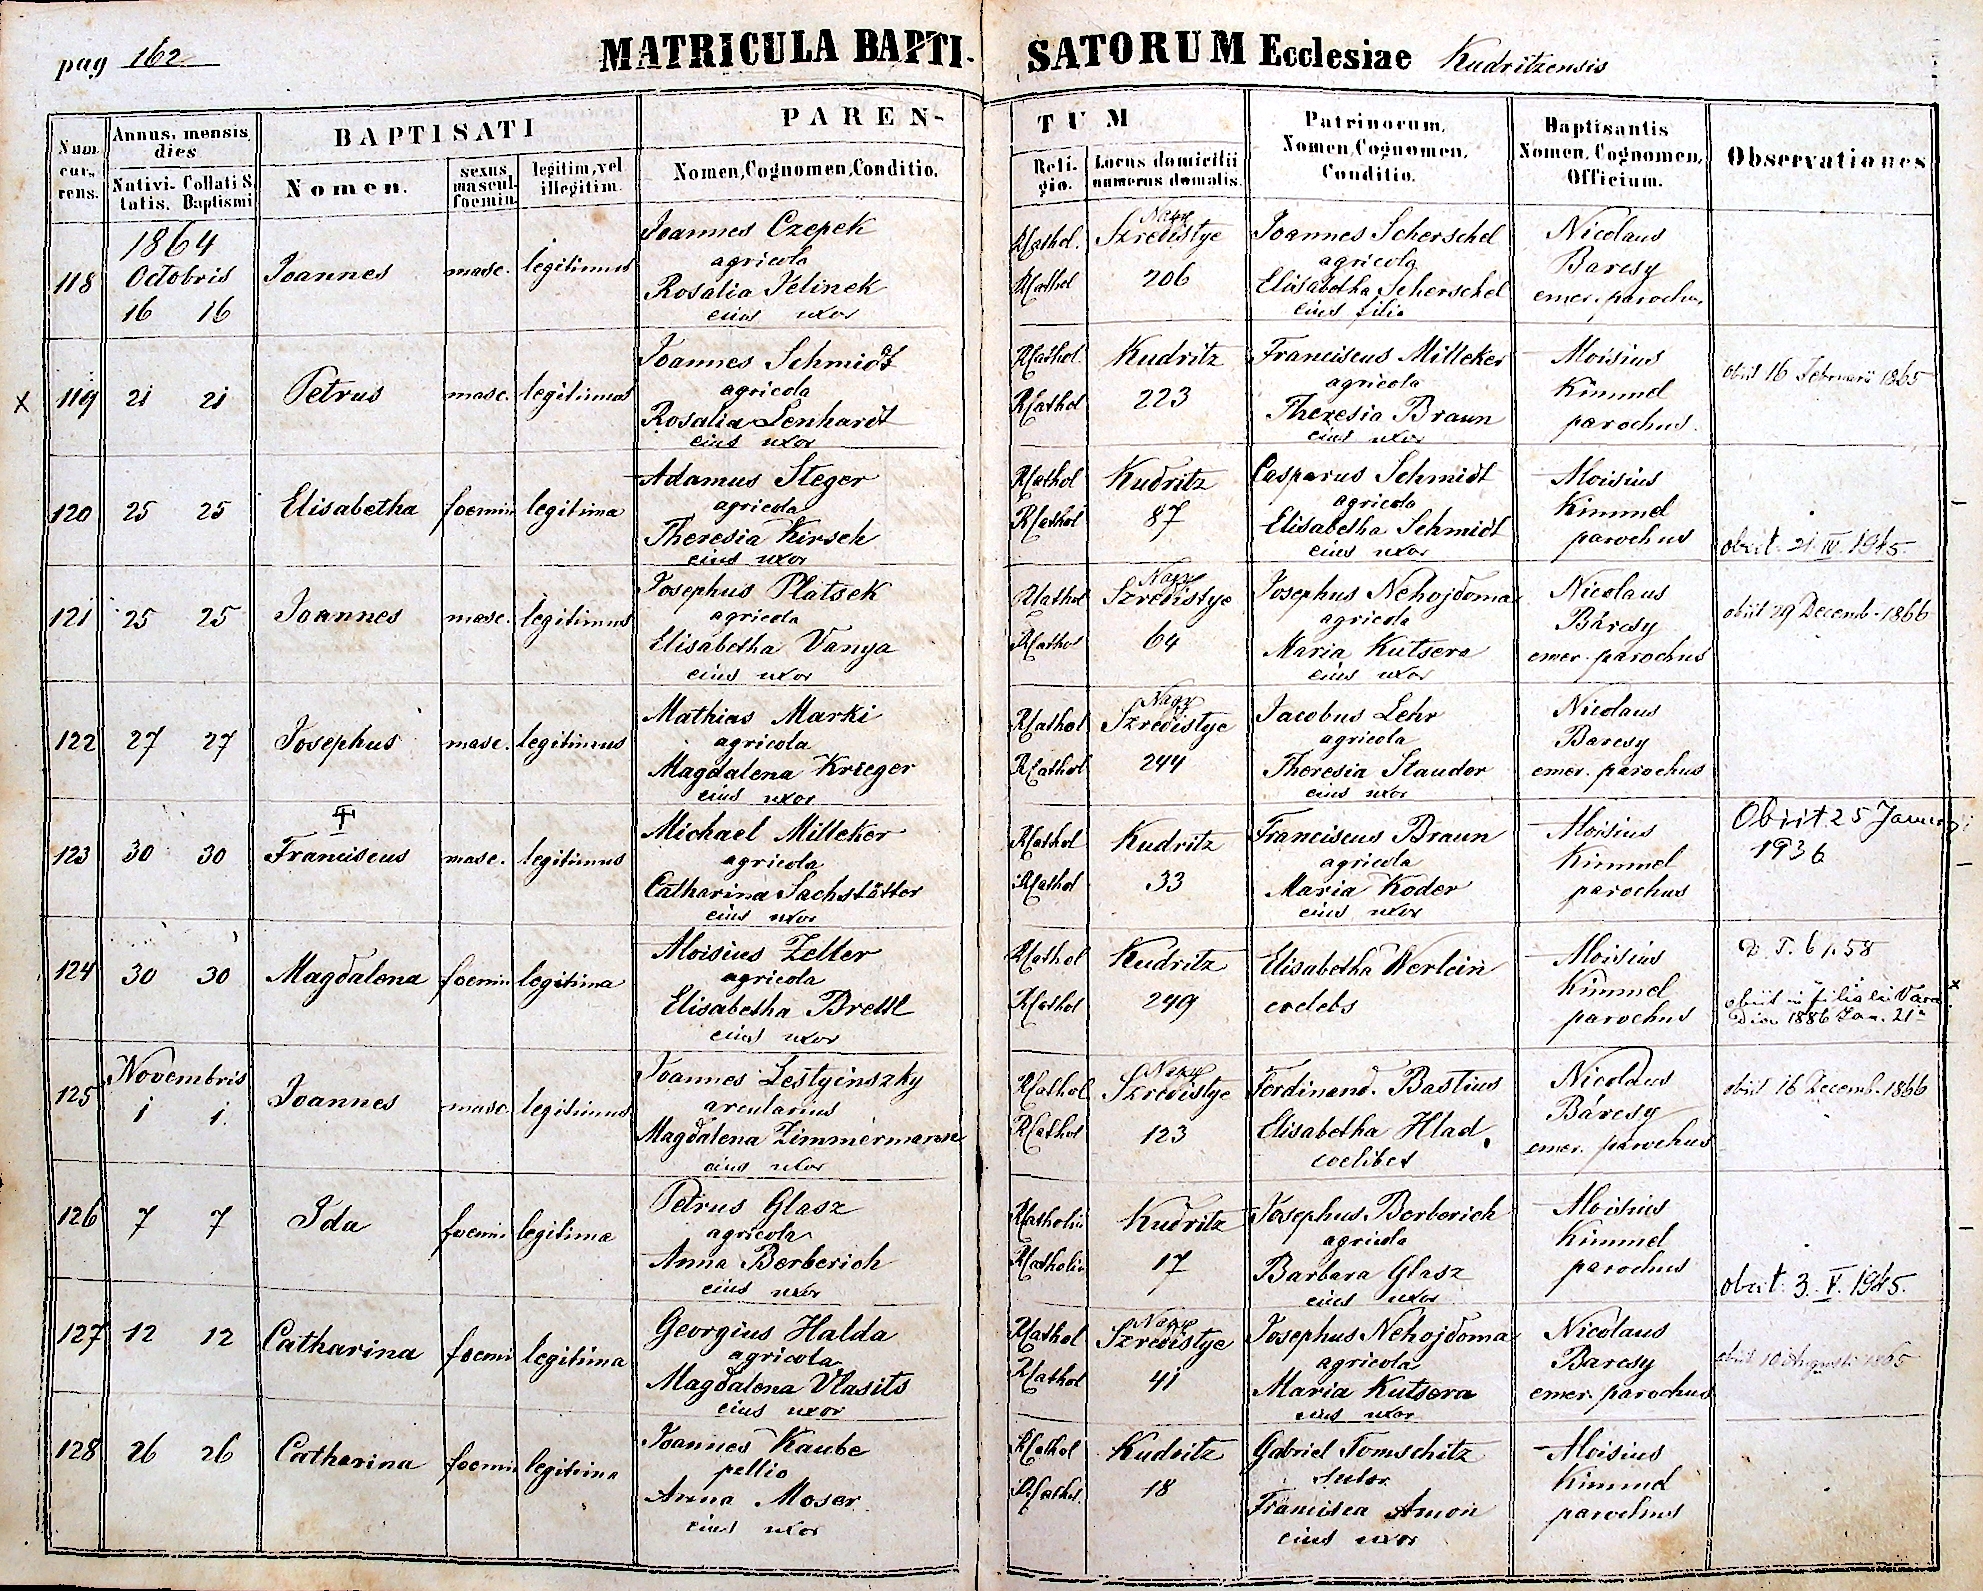 images/church_records/BIRTHS/1852-1870B/162